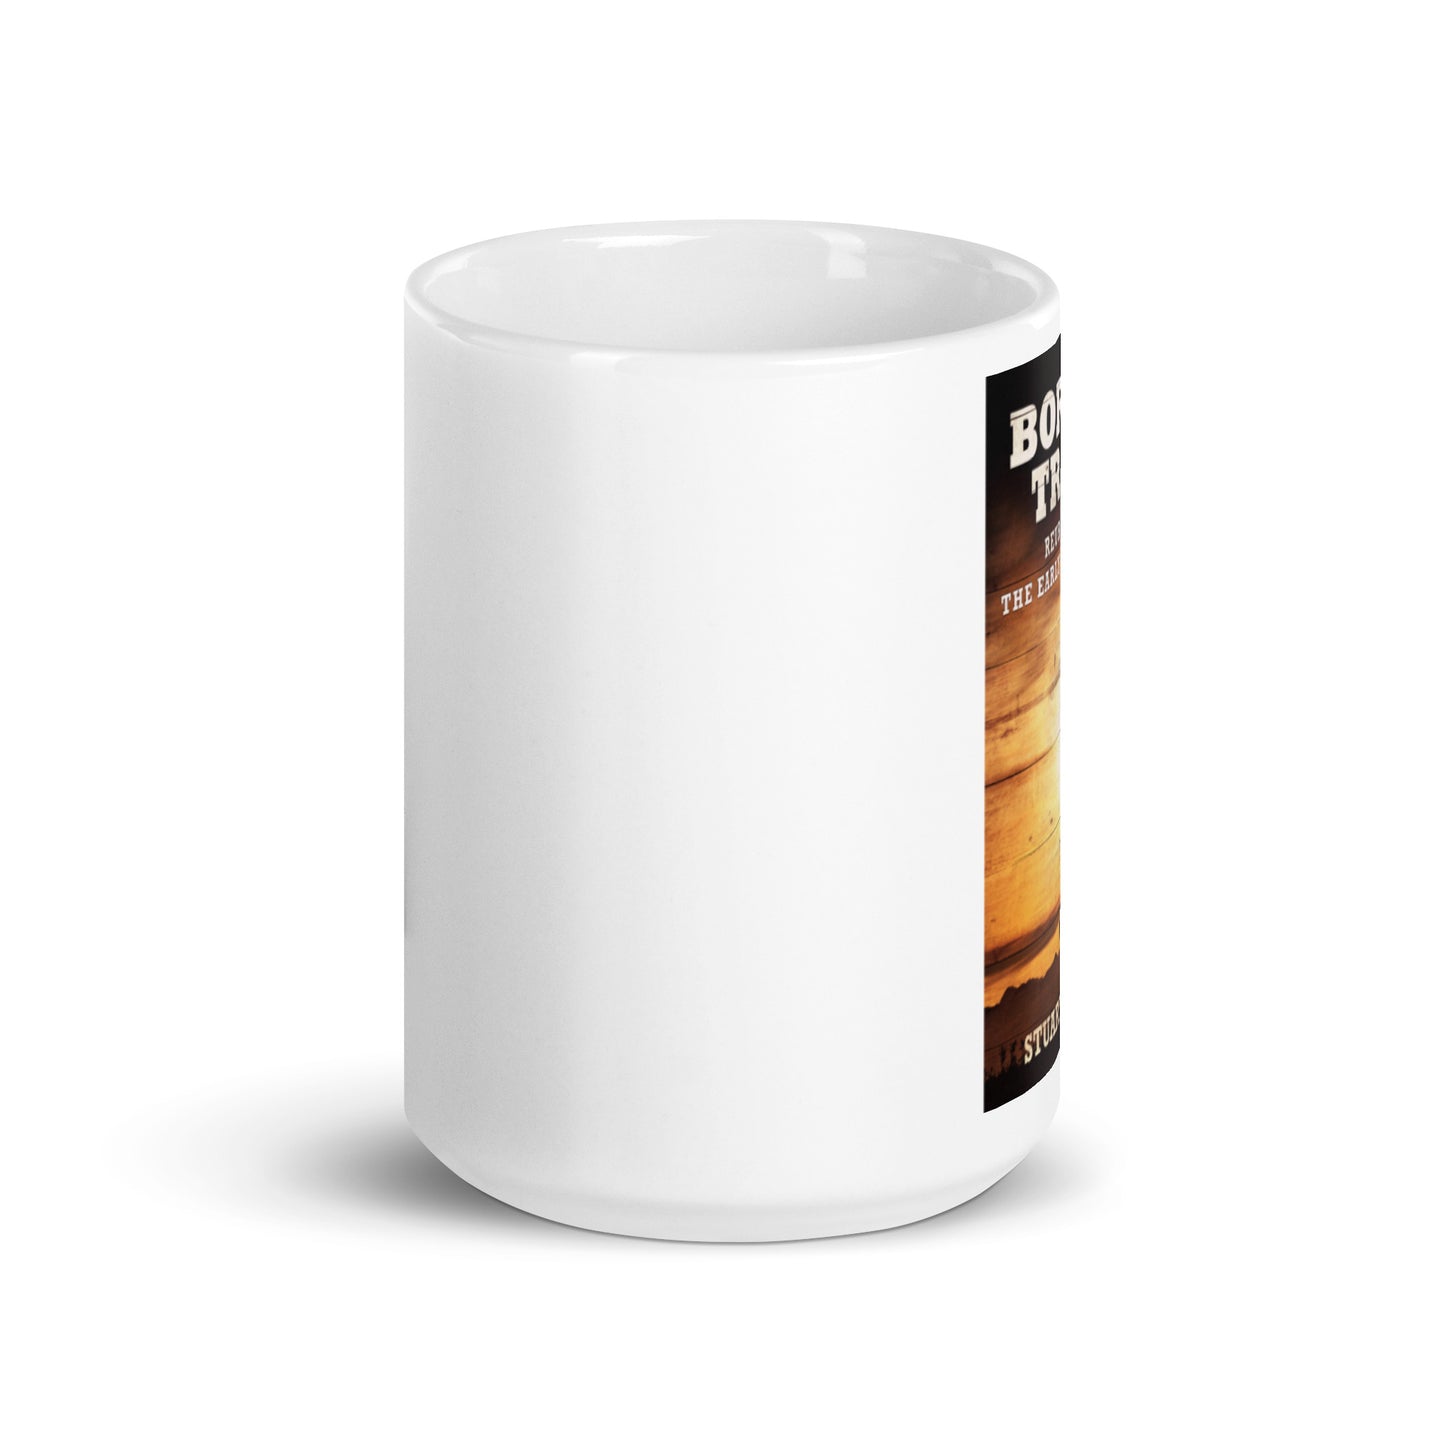 Born To Track - White Coffee Mug